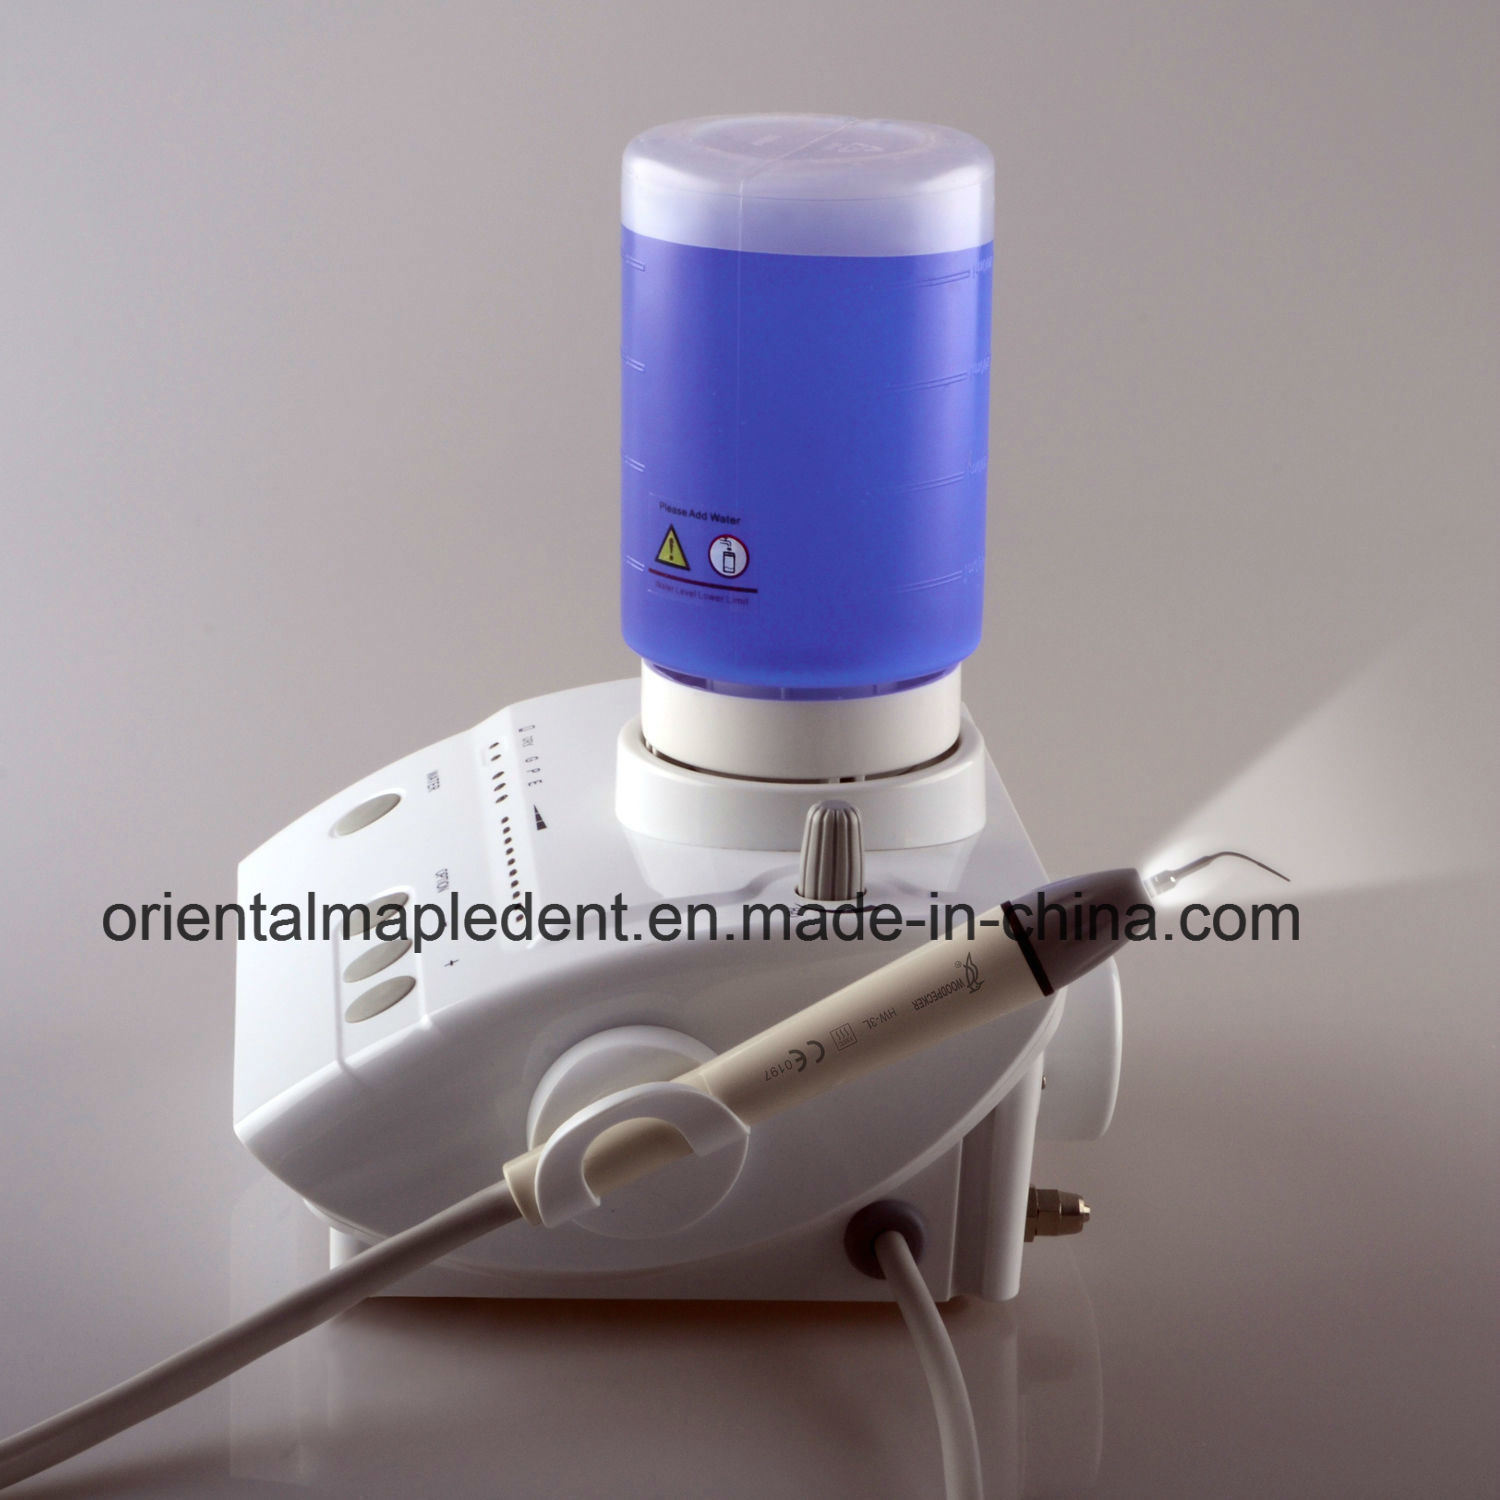 Dental Uds-E LED Fber Optic Ultrasonic Scaler